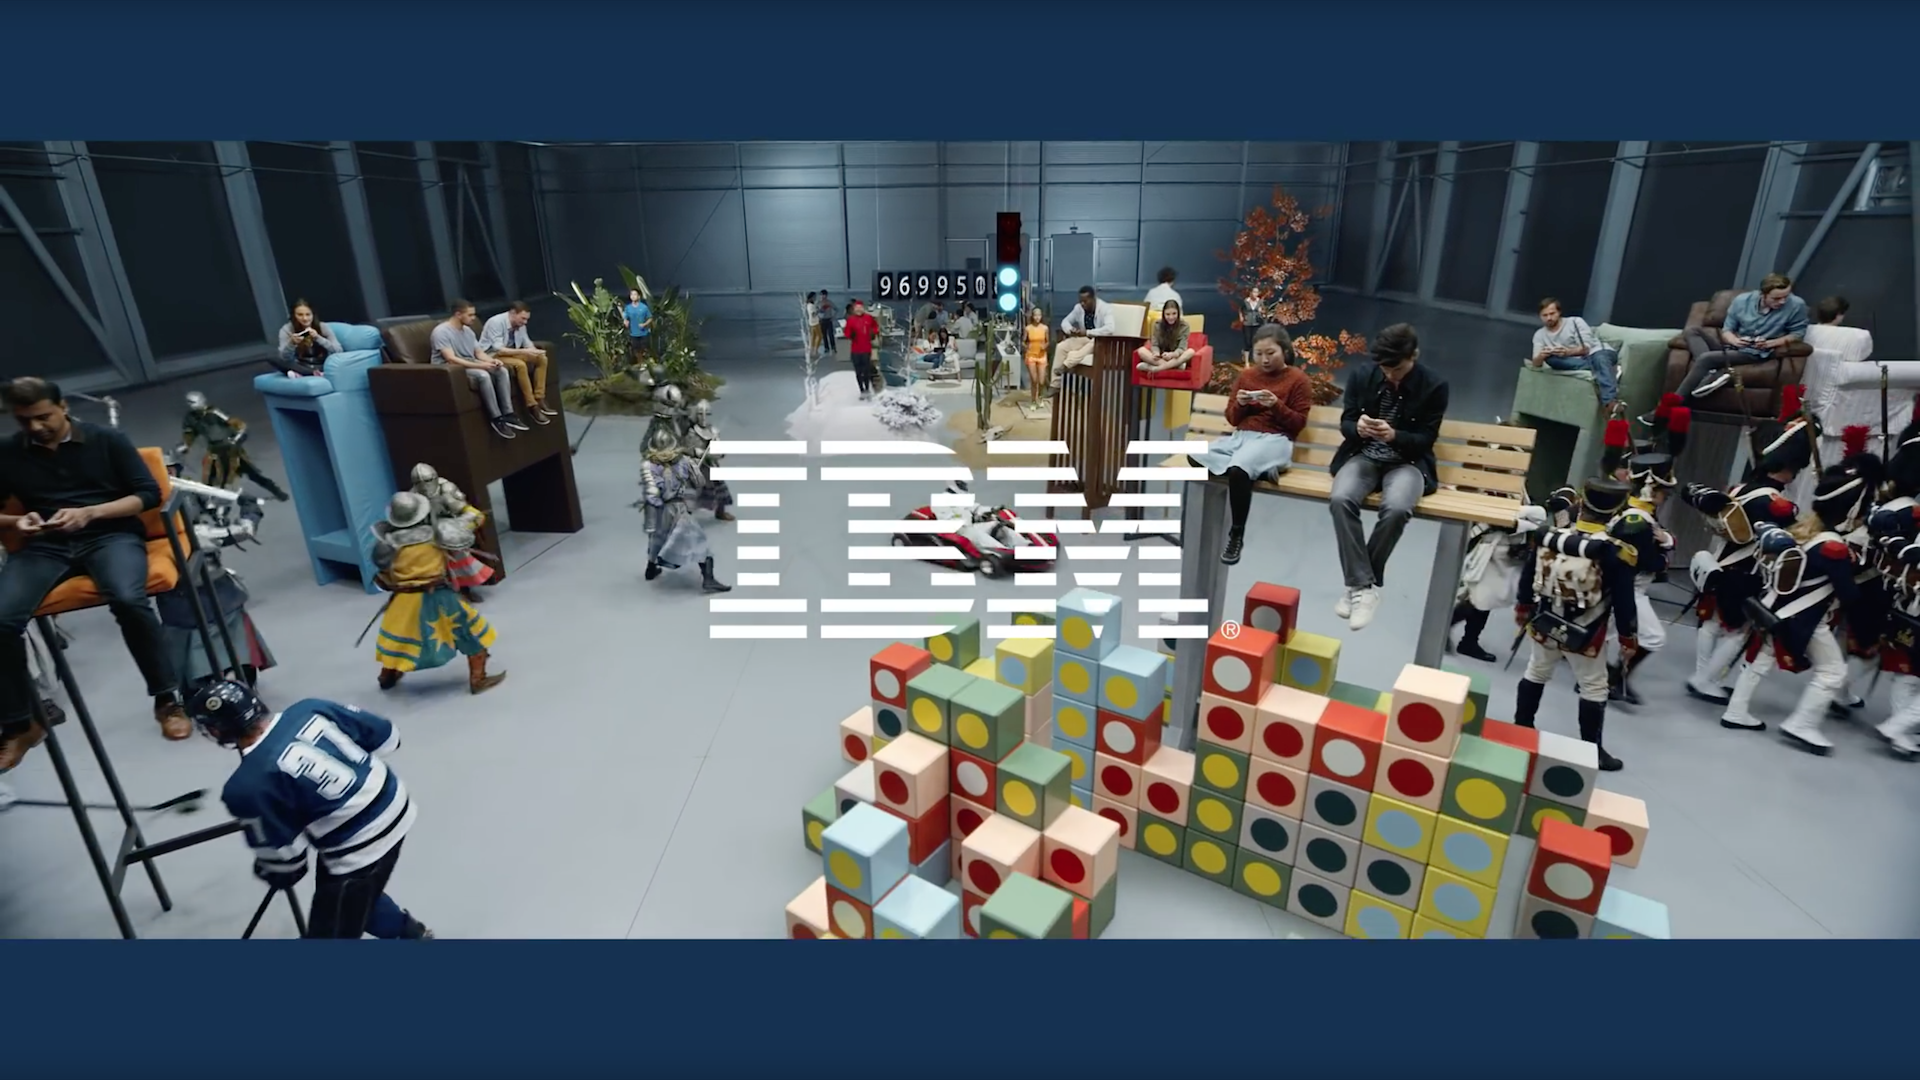 The IBM Cloud: Designed for Start-ups